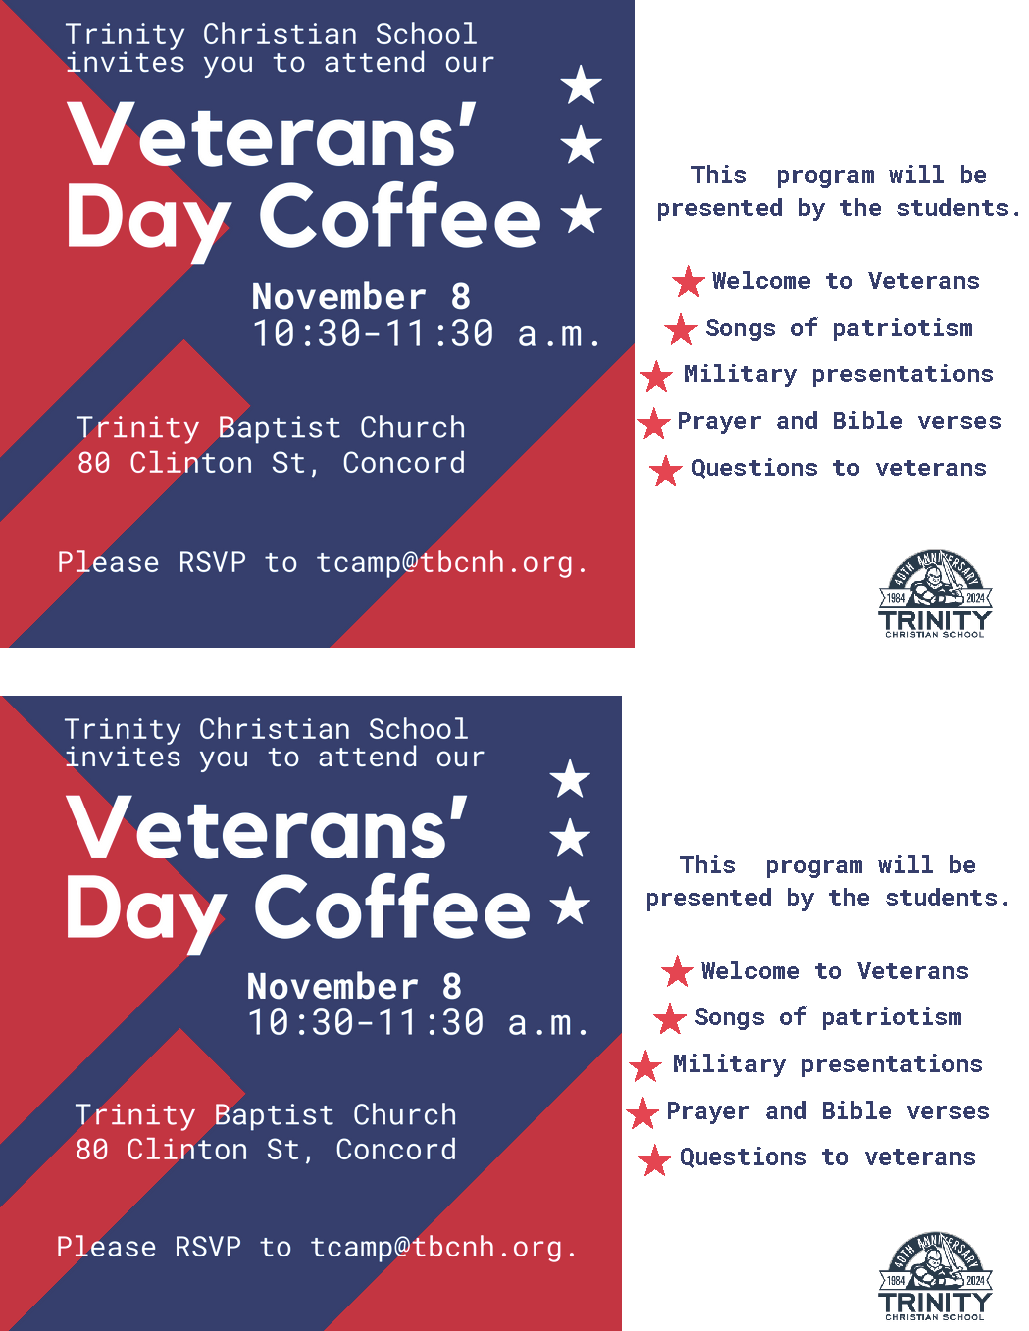 Trinity Christian School Veterans' Day Coffee flyer